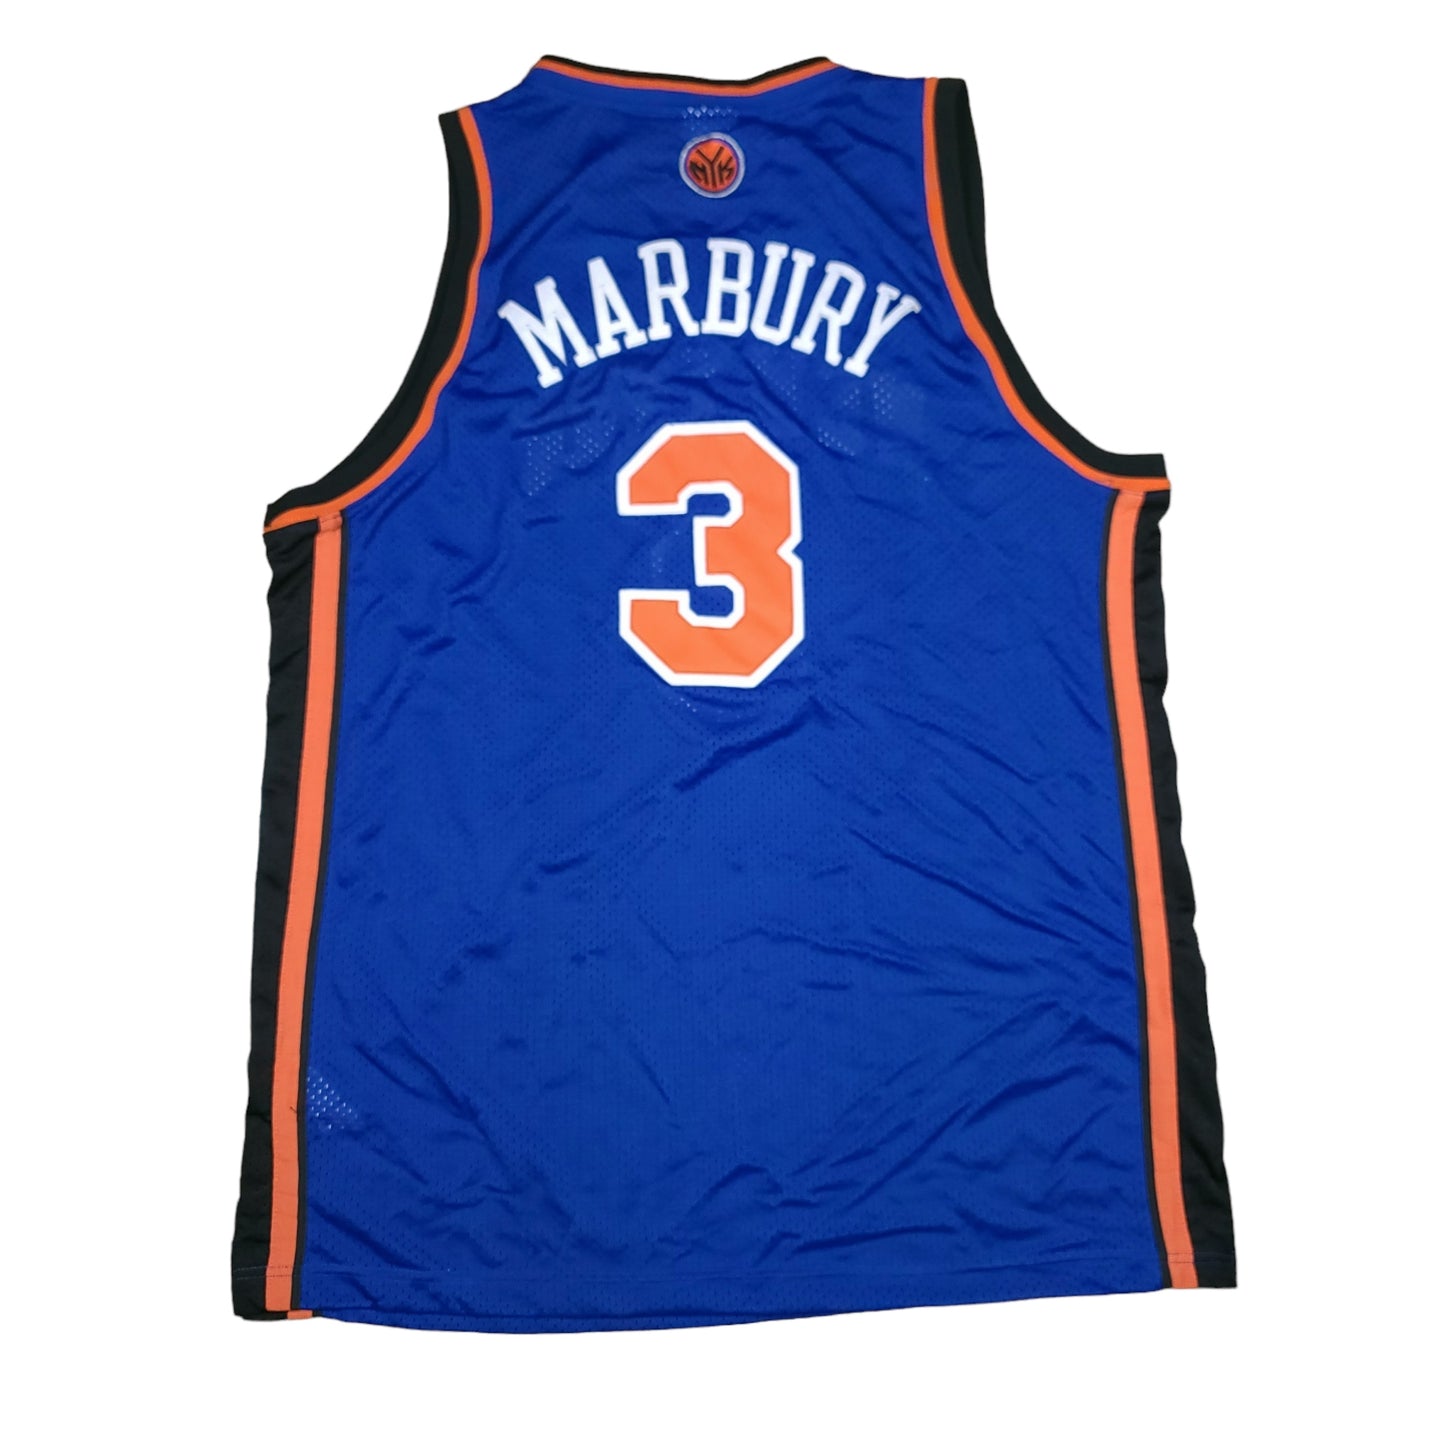 Stephon Marbury New York Knicks Reebok Basketball Jersey (New With Tags)